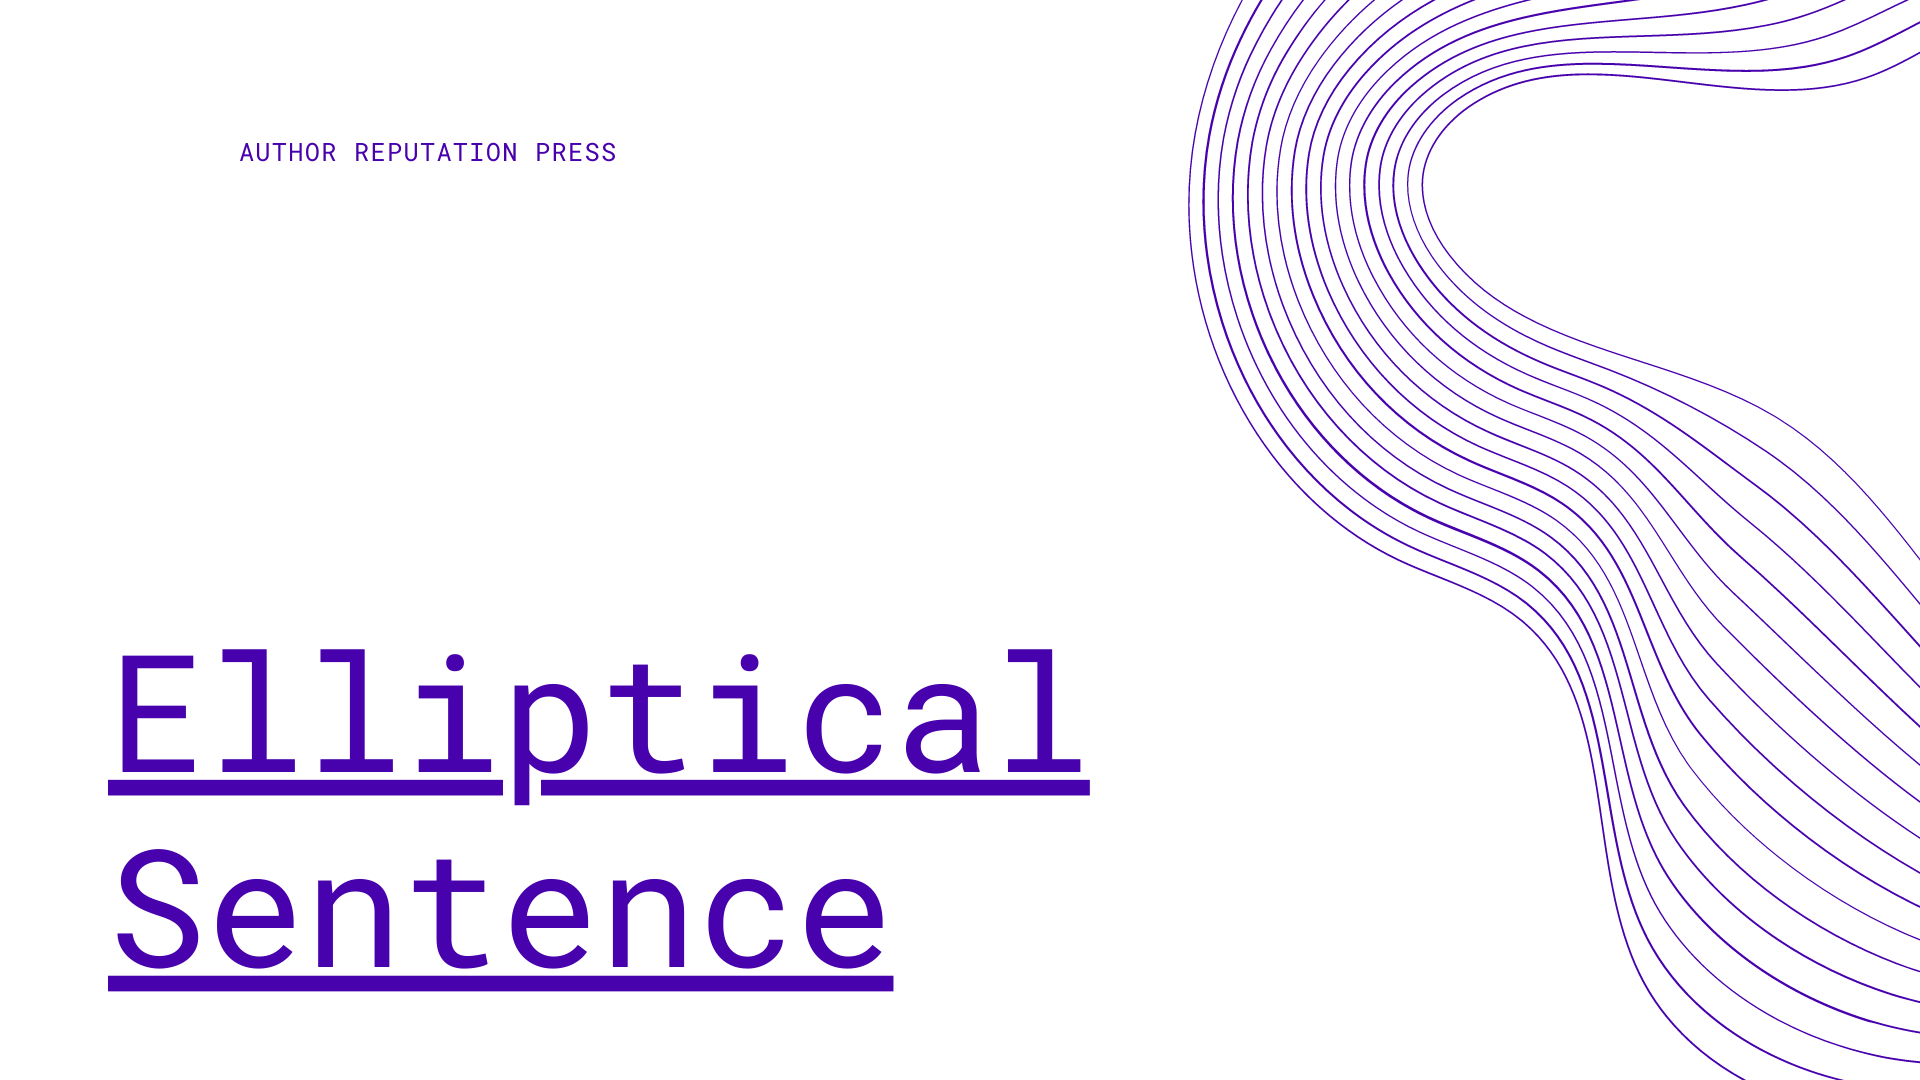 Tips for writing an elliptical sentence - Author Reputation Press Blog